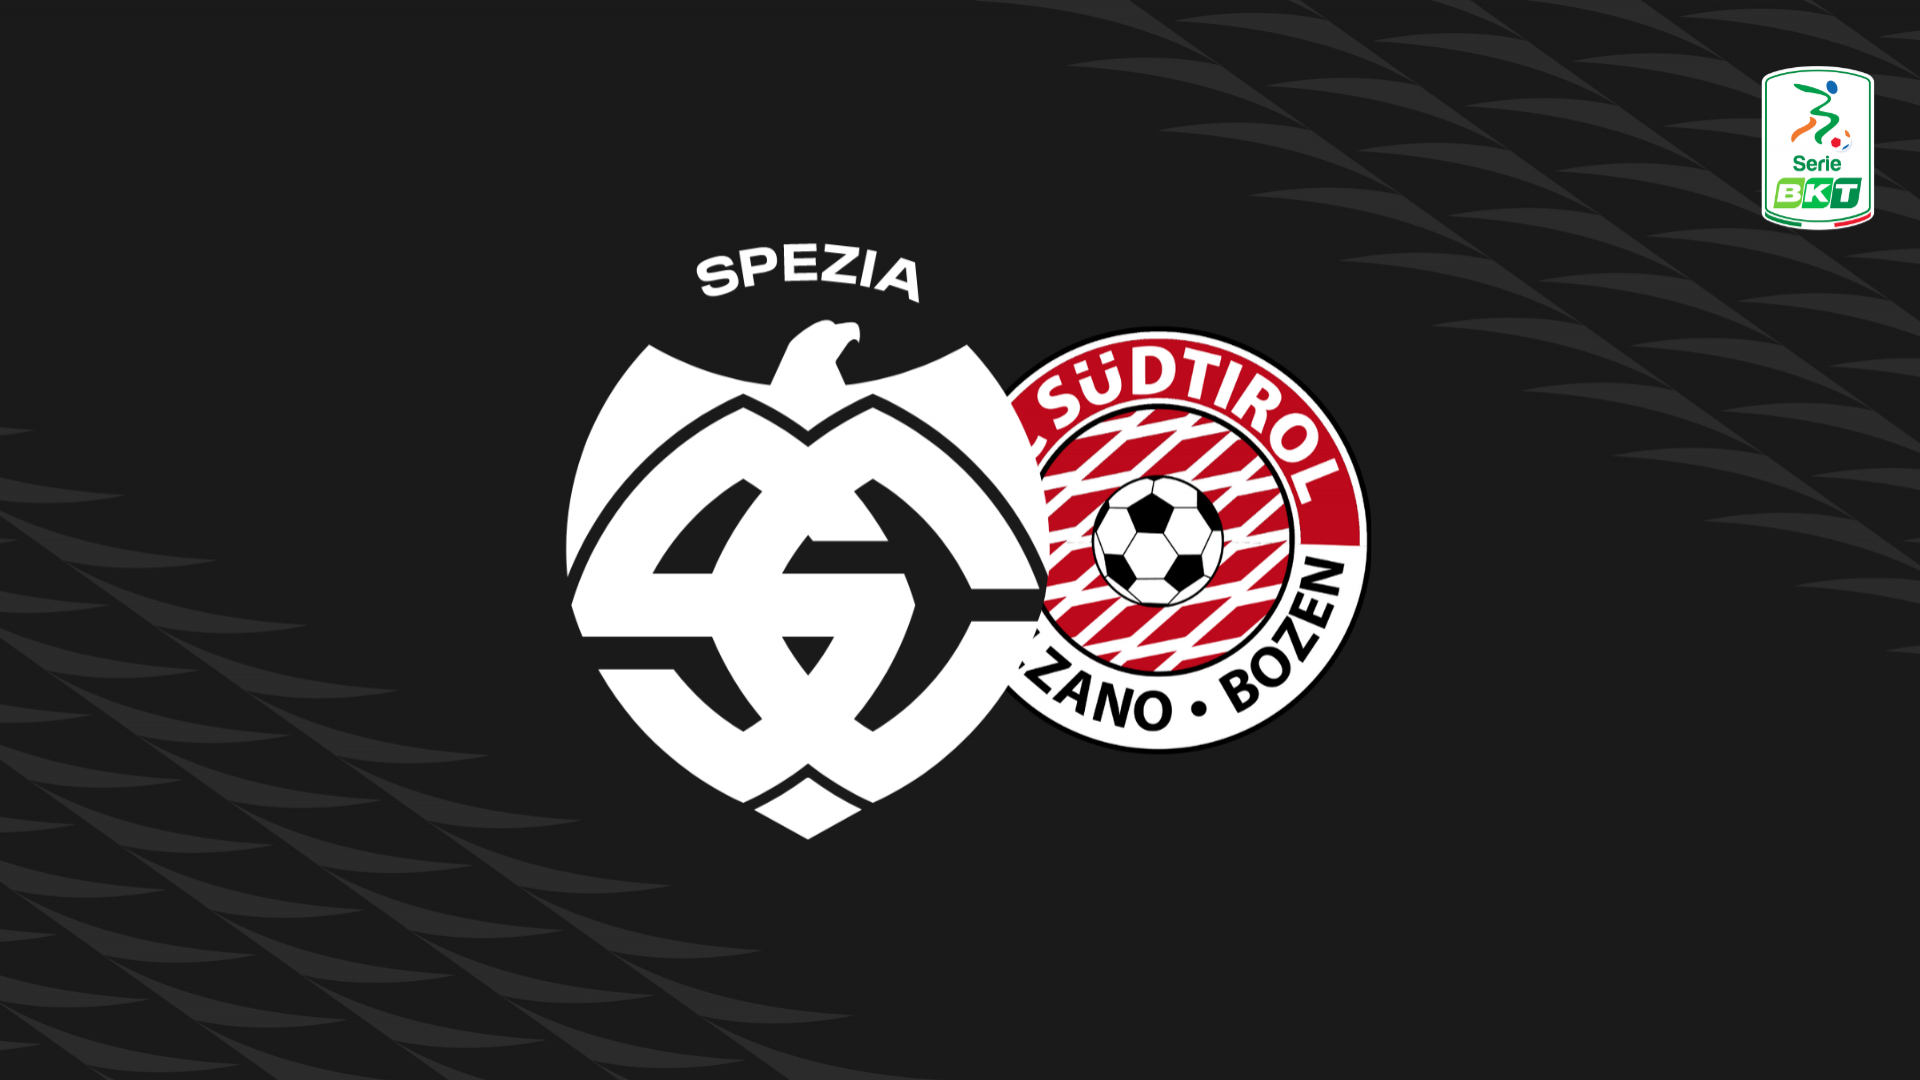 Serie BKT: Spezia-Südtirol 2-1